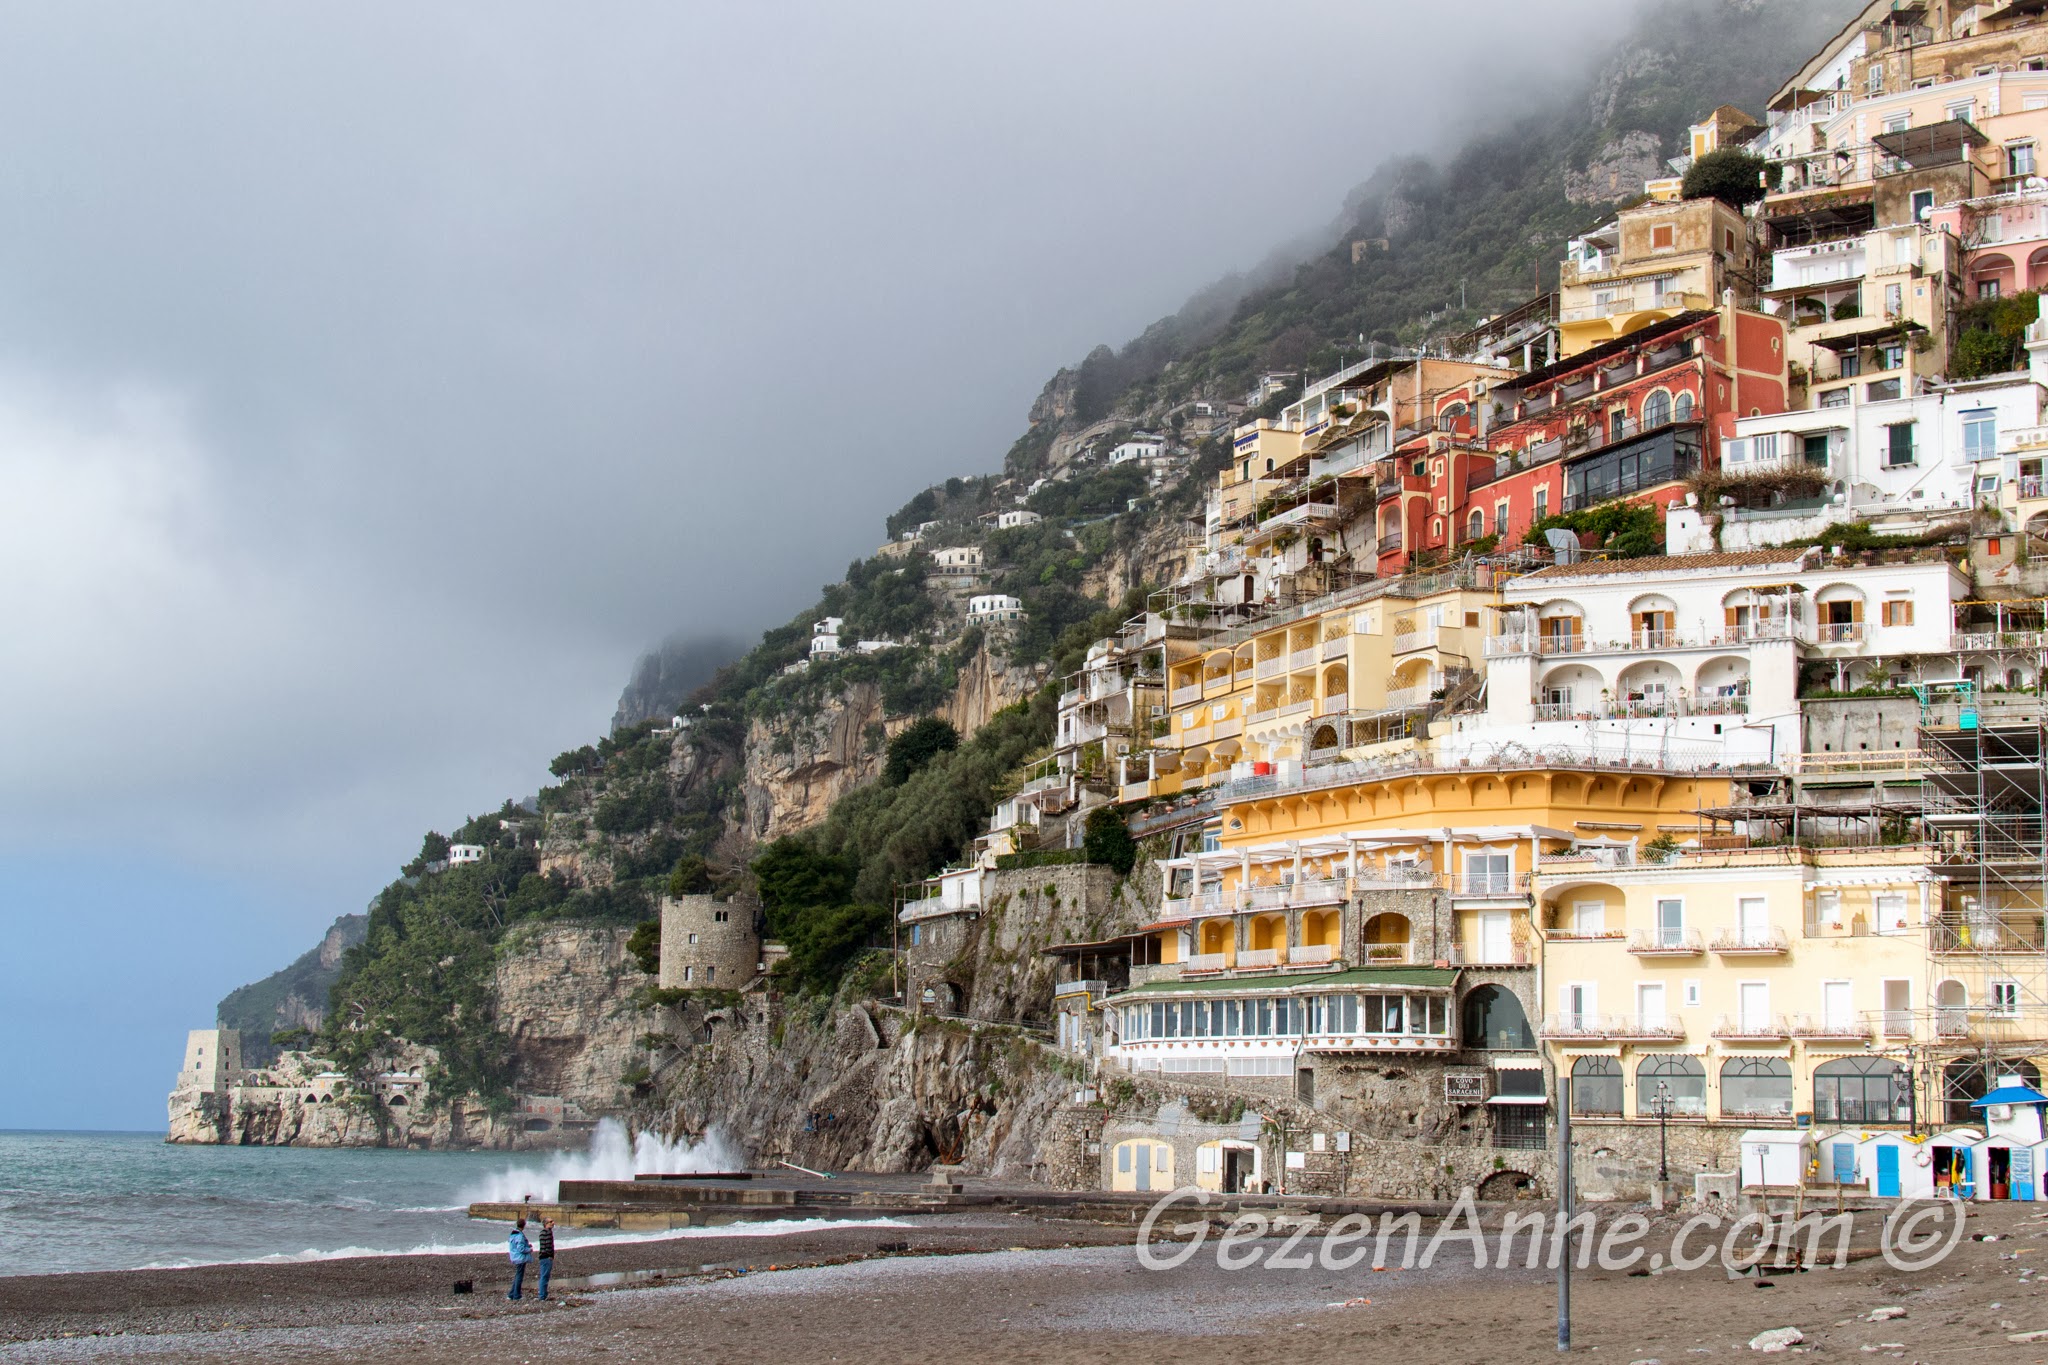 Positano is the prettiest town on the Amalfi Coast